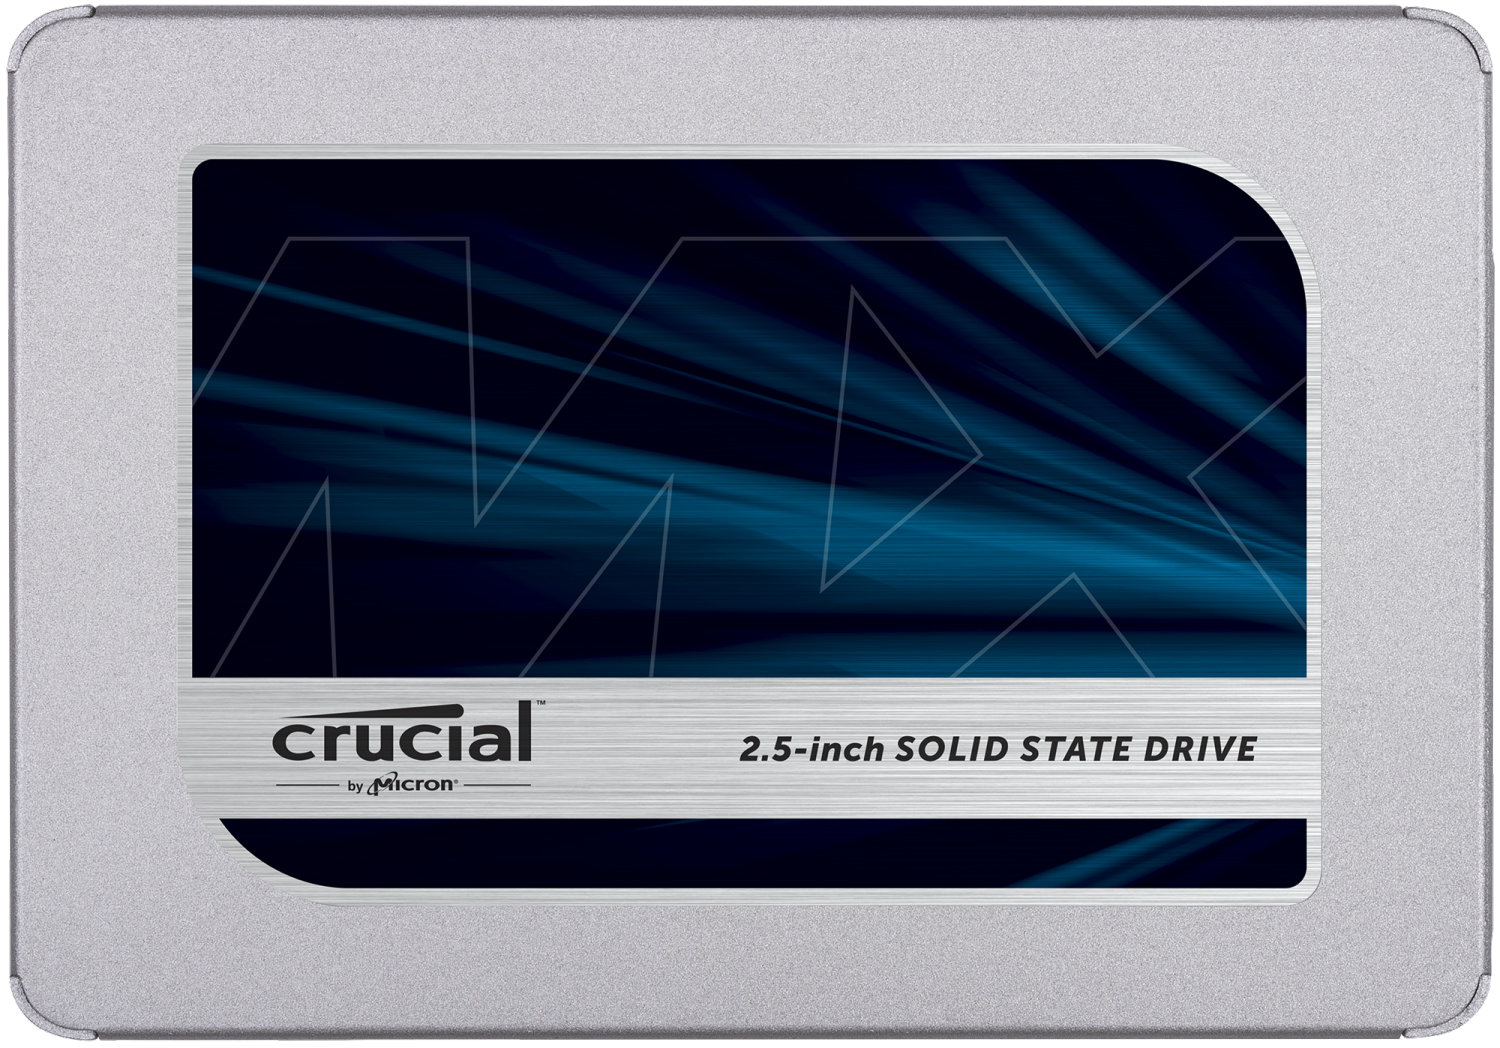 Crucial SSD - 2.5-inch SSD